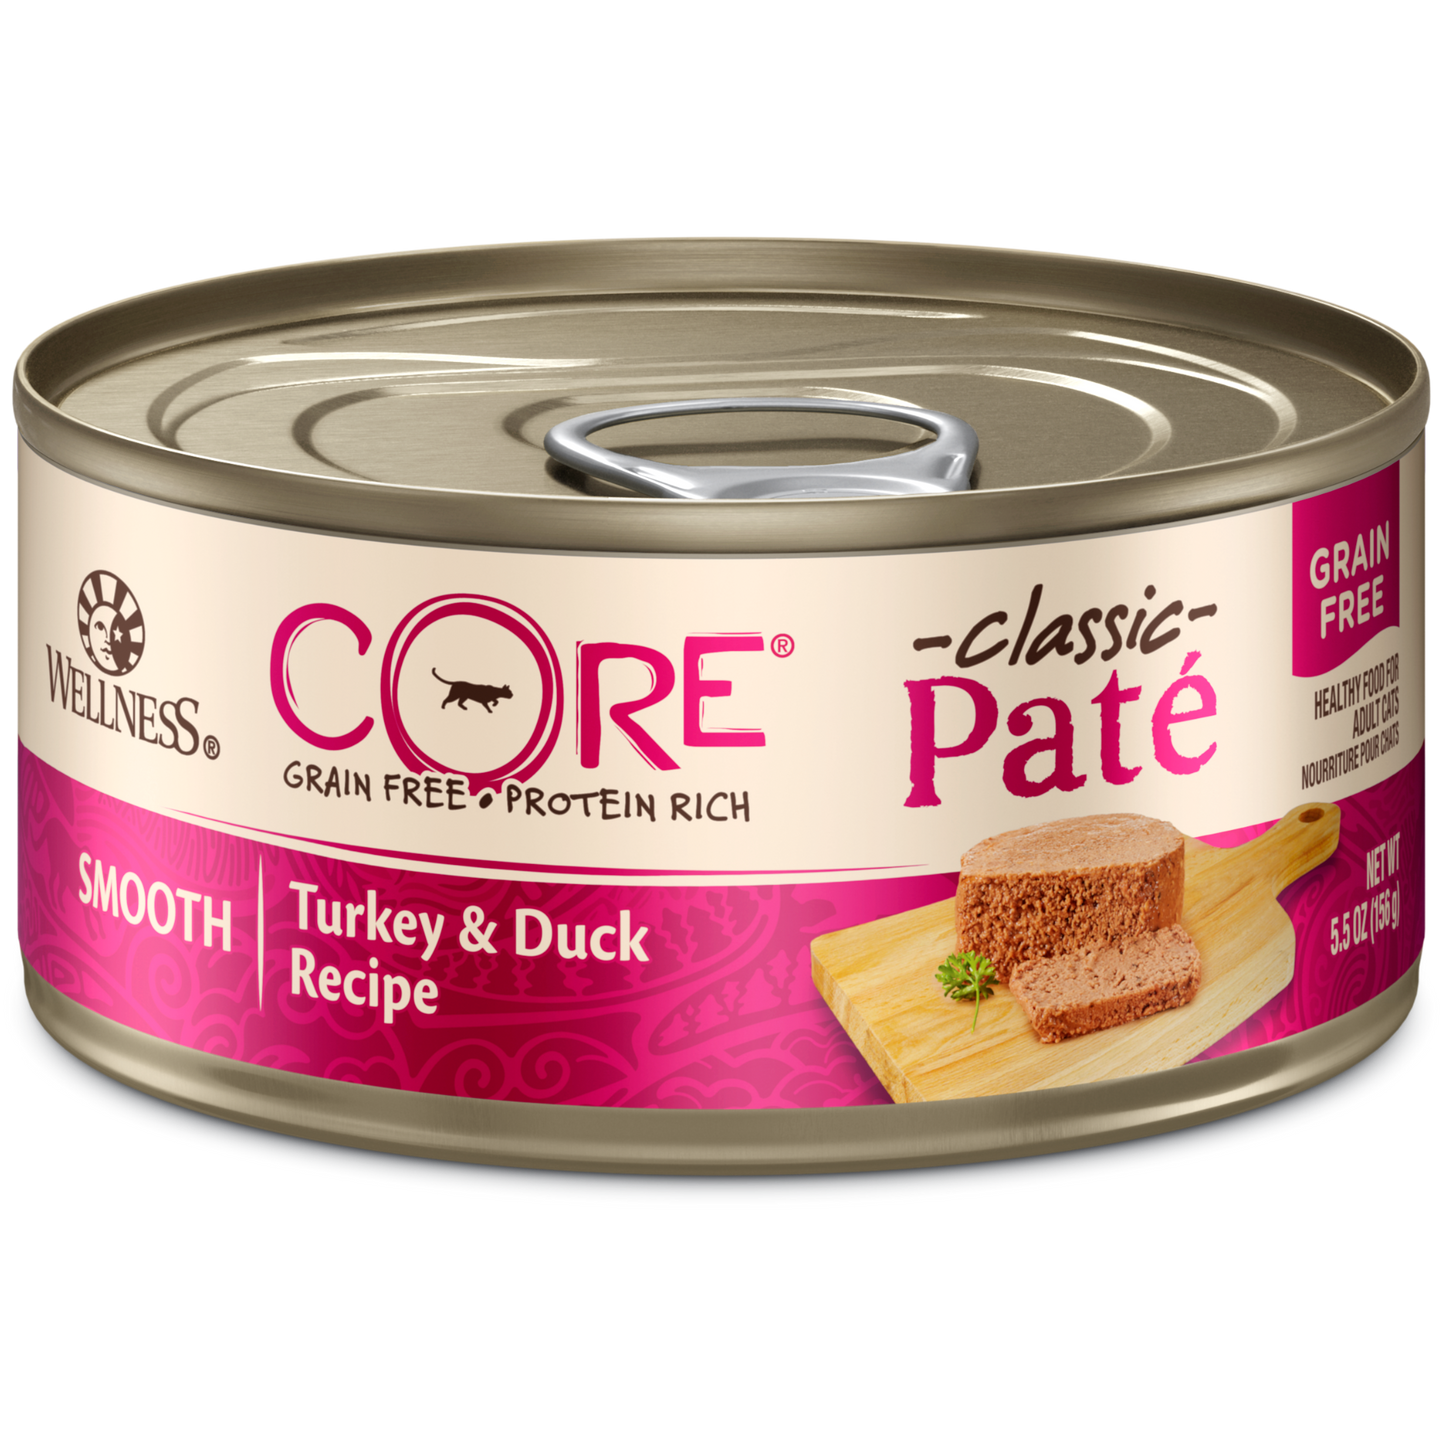 Wellness Premium Canned Cat Food | CORE Grain-Free Formula | Turkey & Duck Pate Recipe | 5.5 oz. Cans